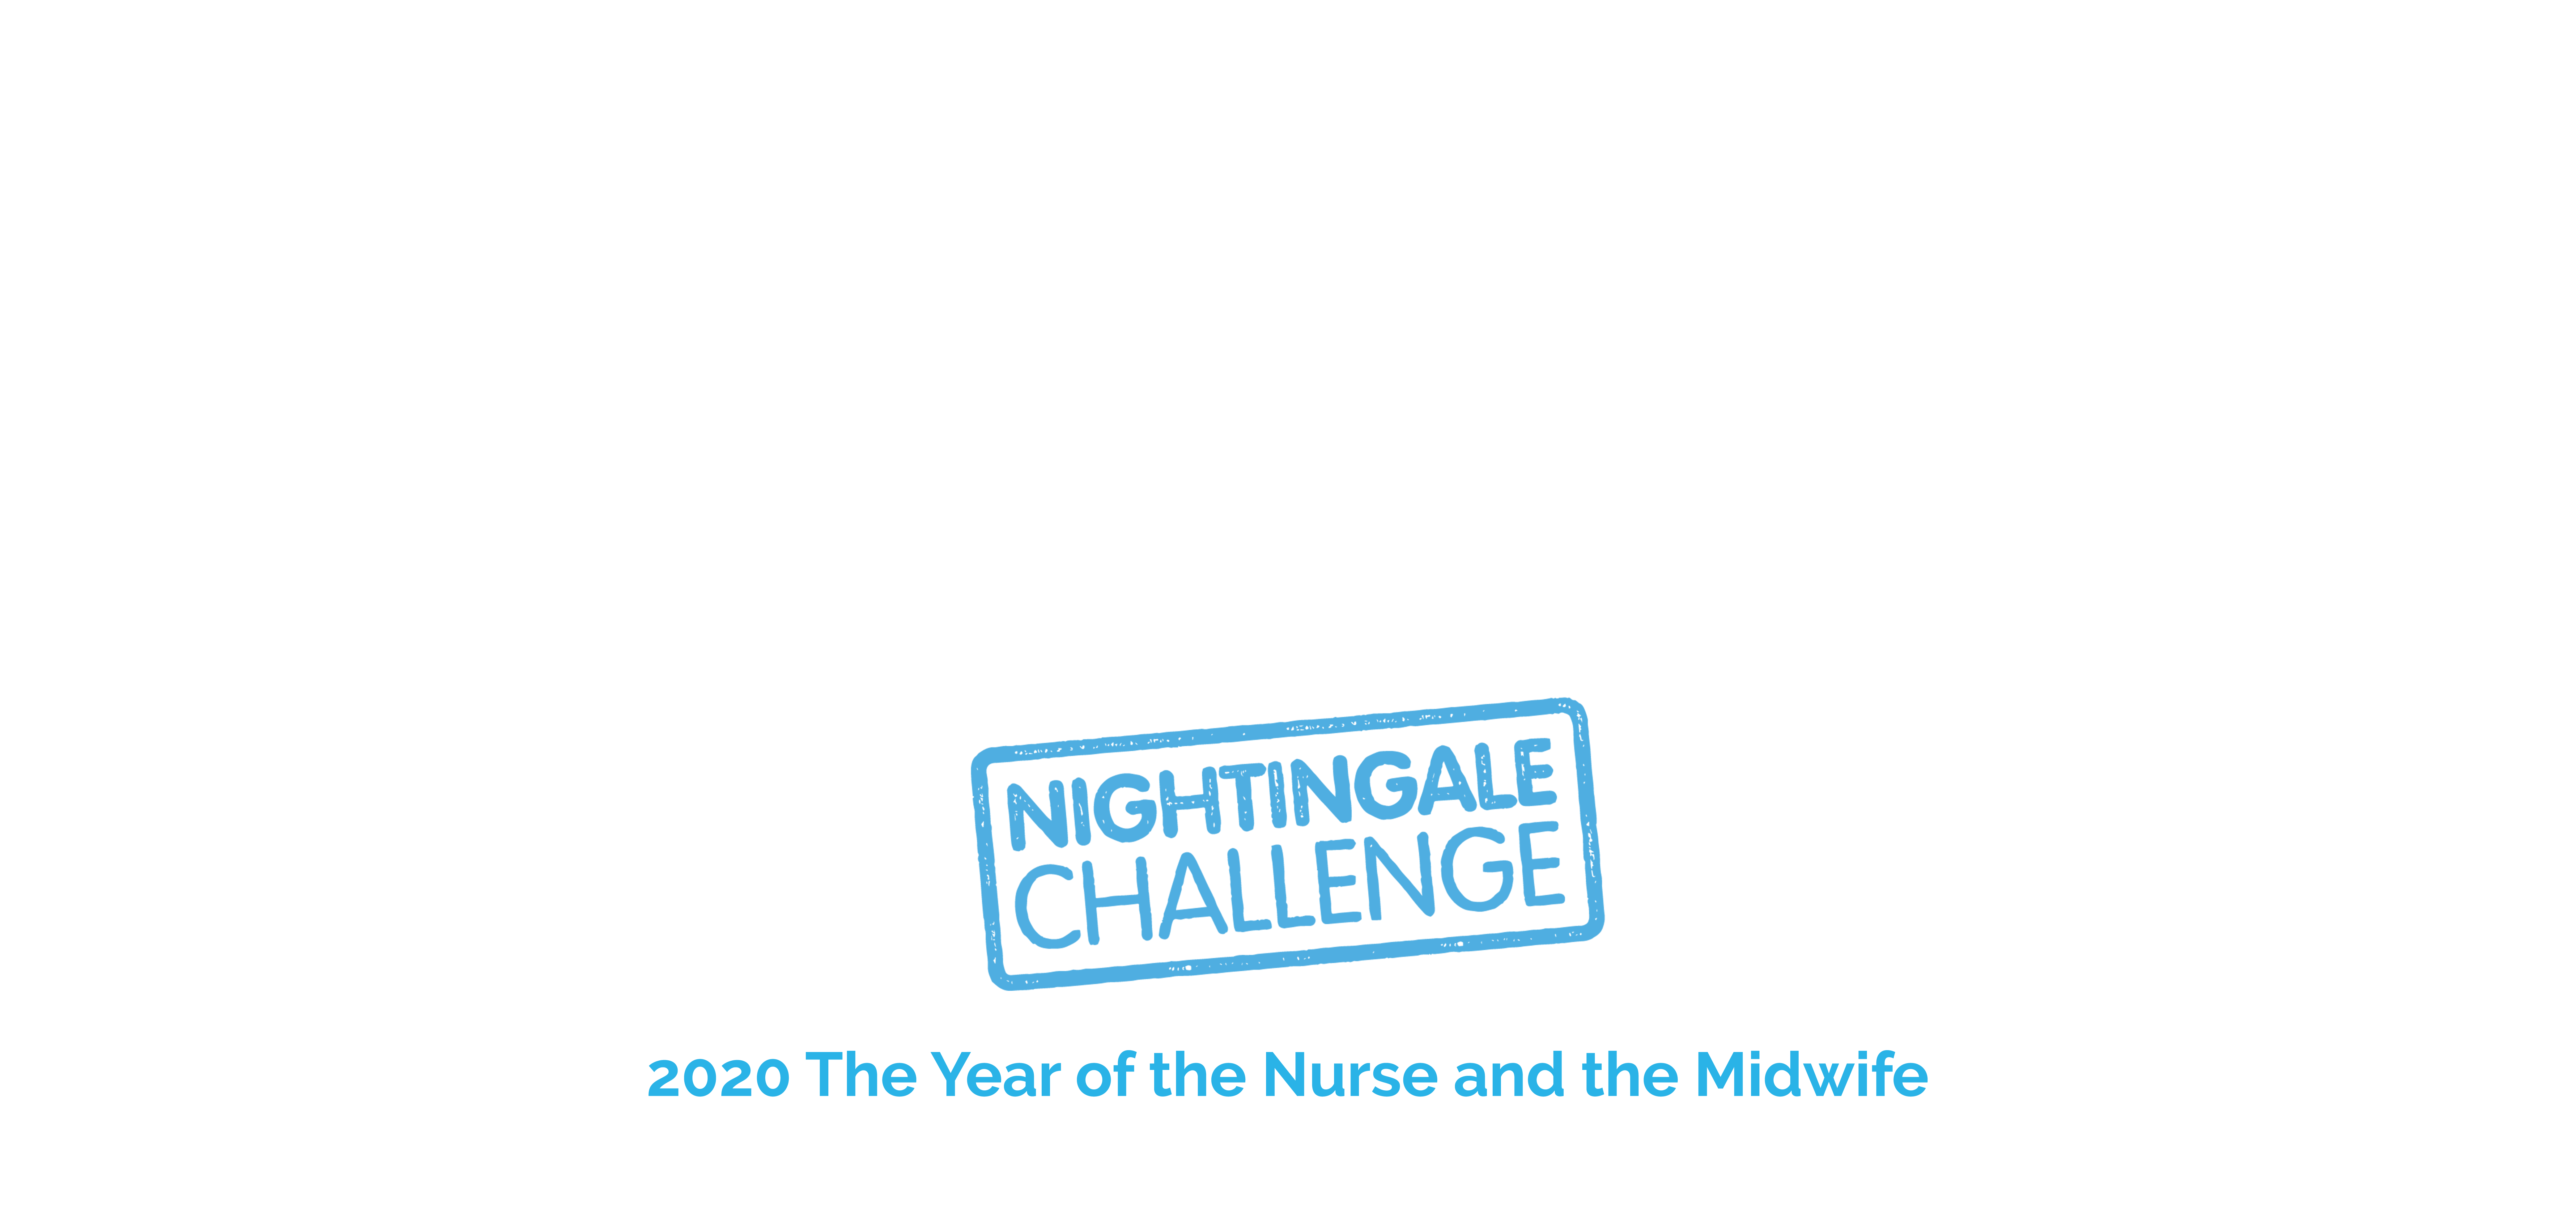 nightingale-challenge-banner-title-05